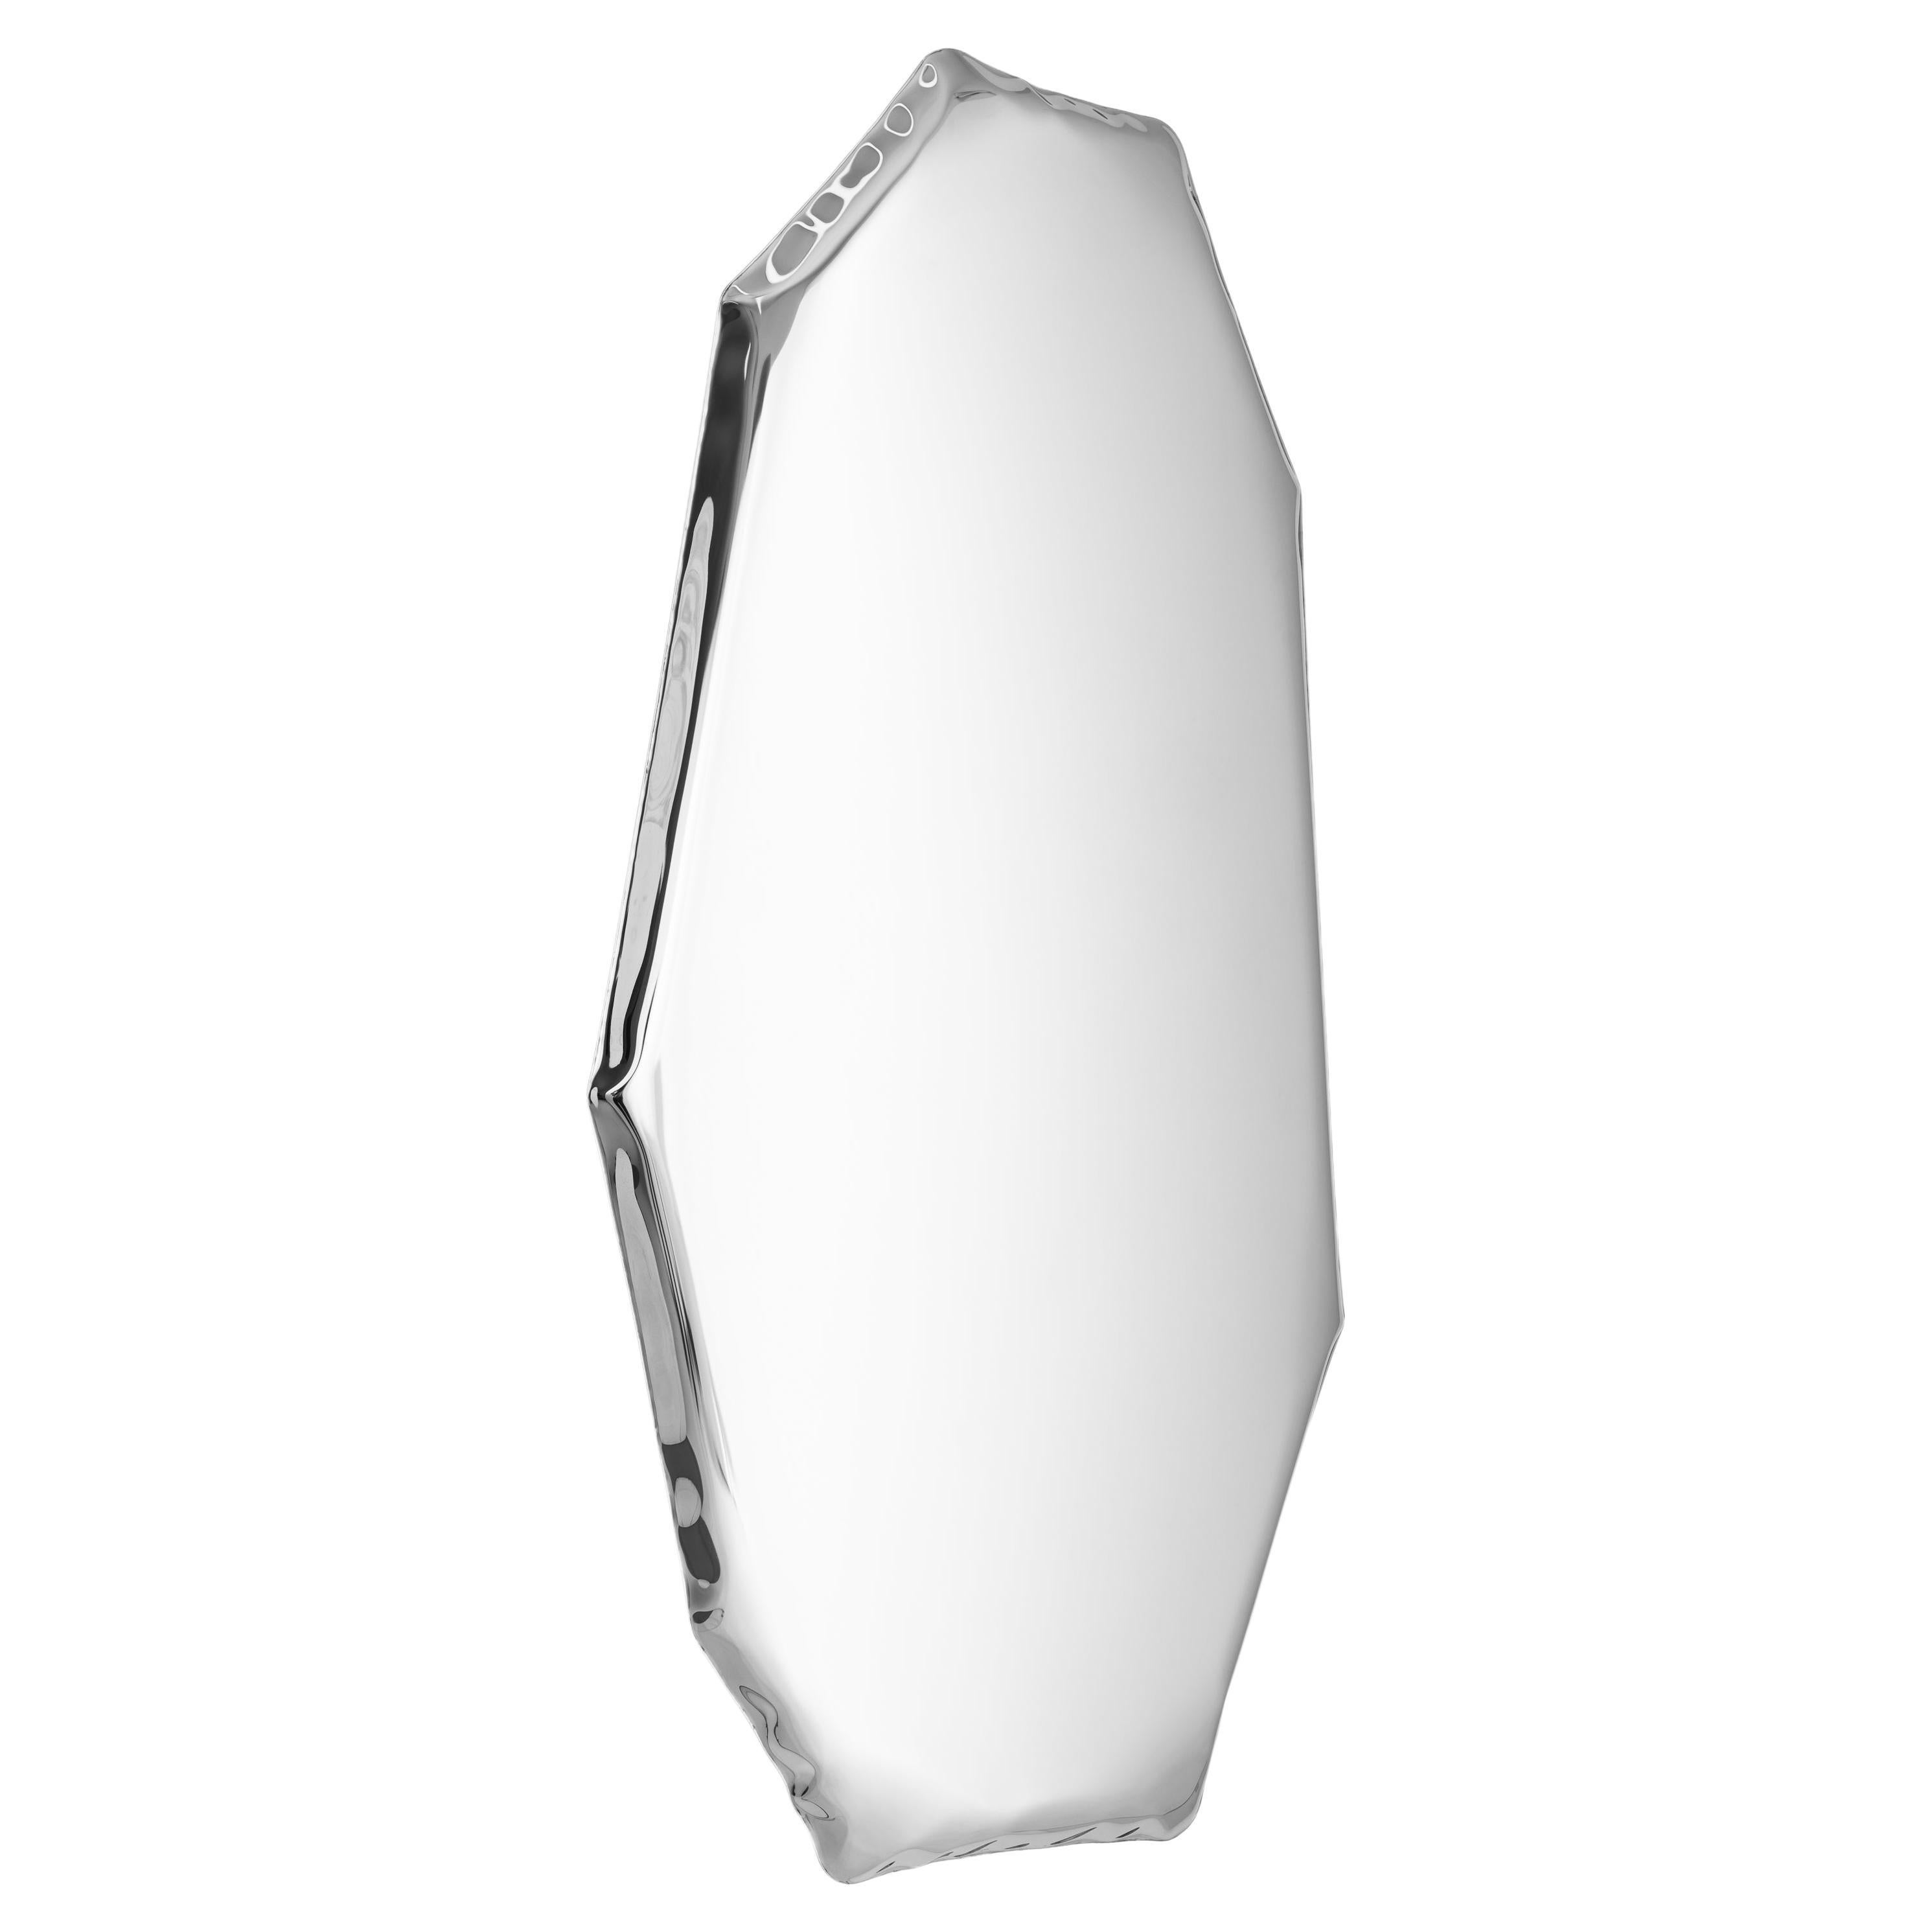 Tafla C3 Polished Stainless Steel Wall Mirror by Zieta